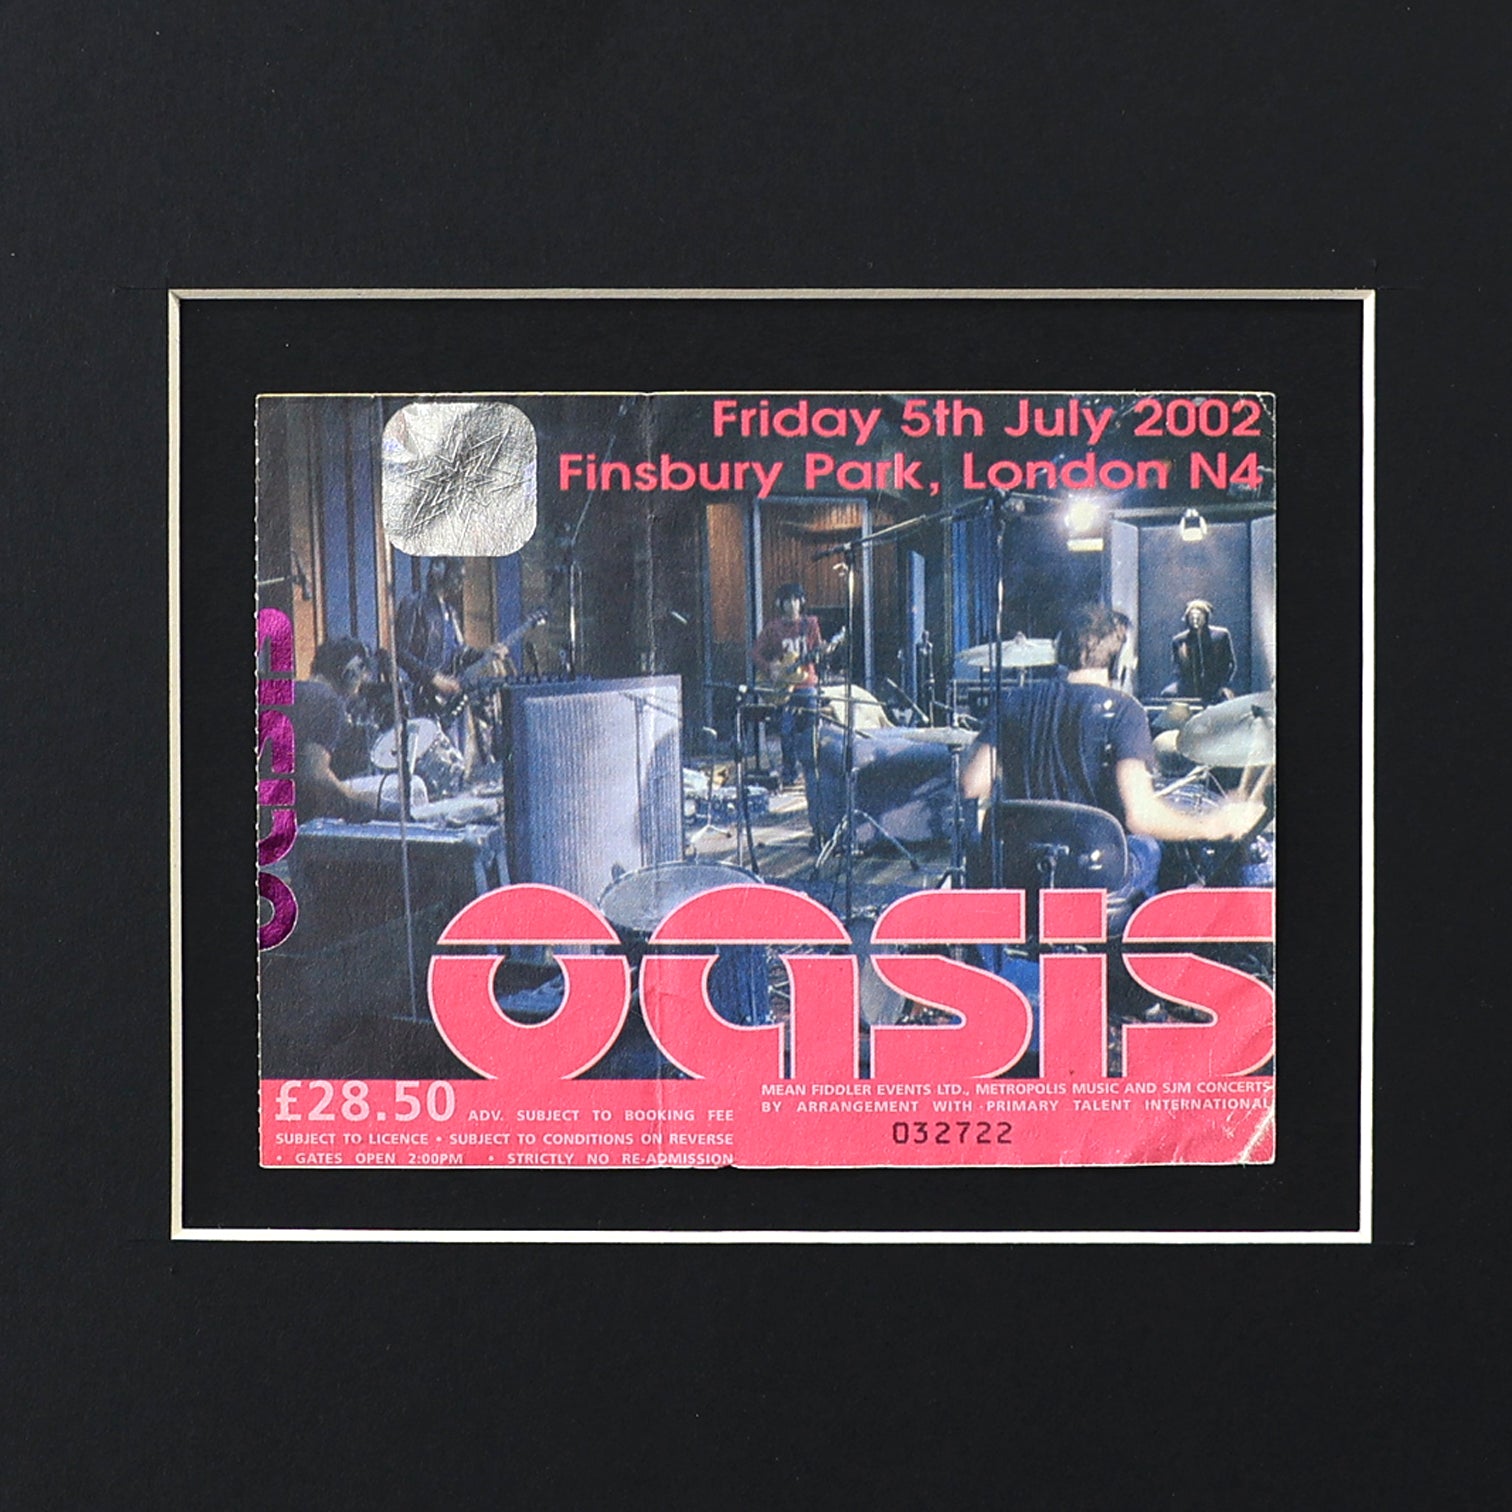 Oasis - Finsbury Park 2002 Framed Ticket - New Item